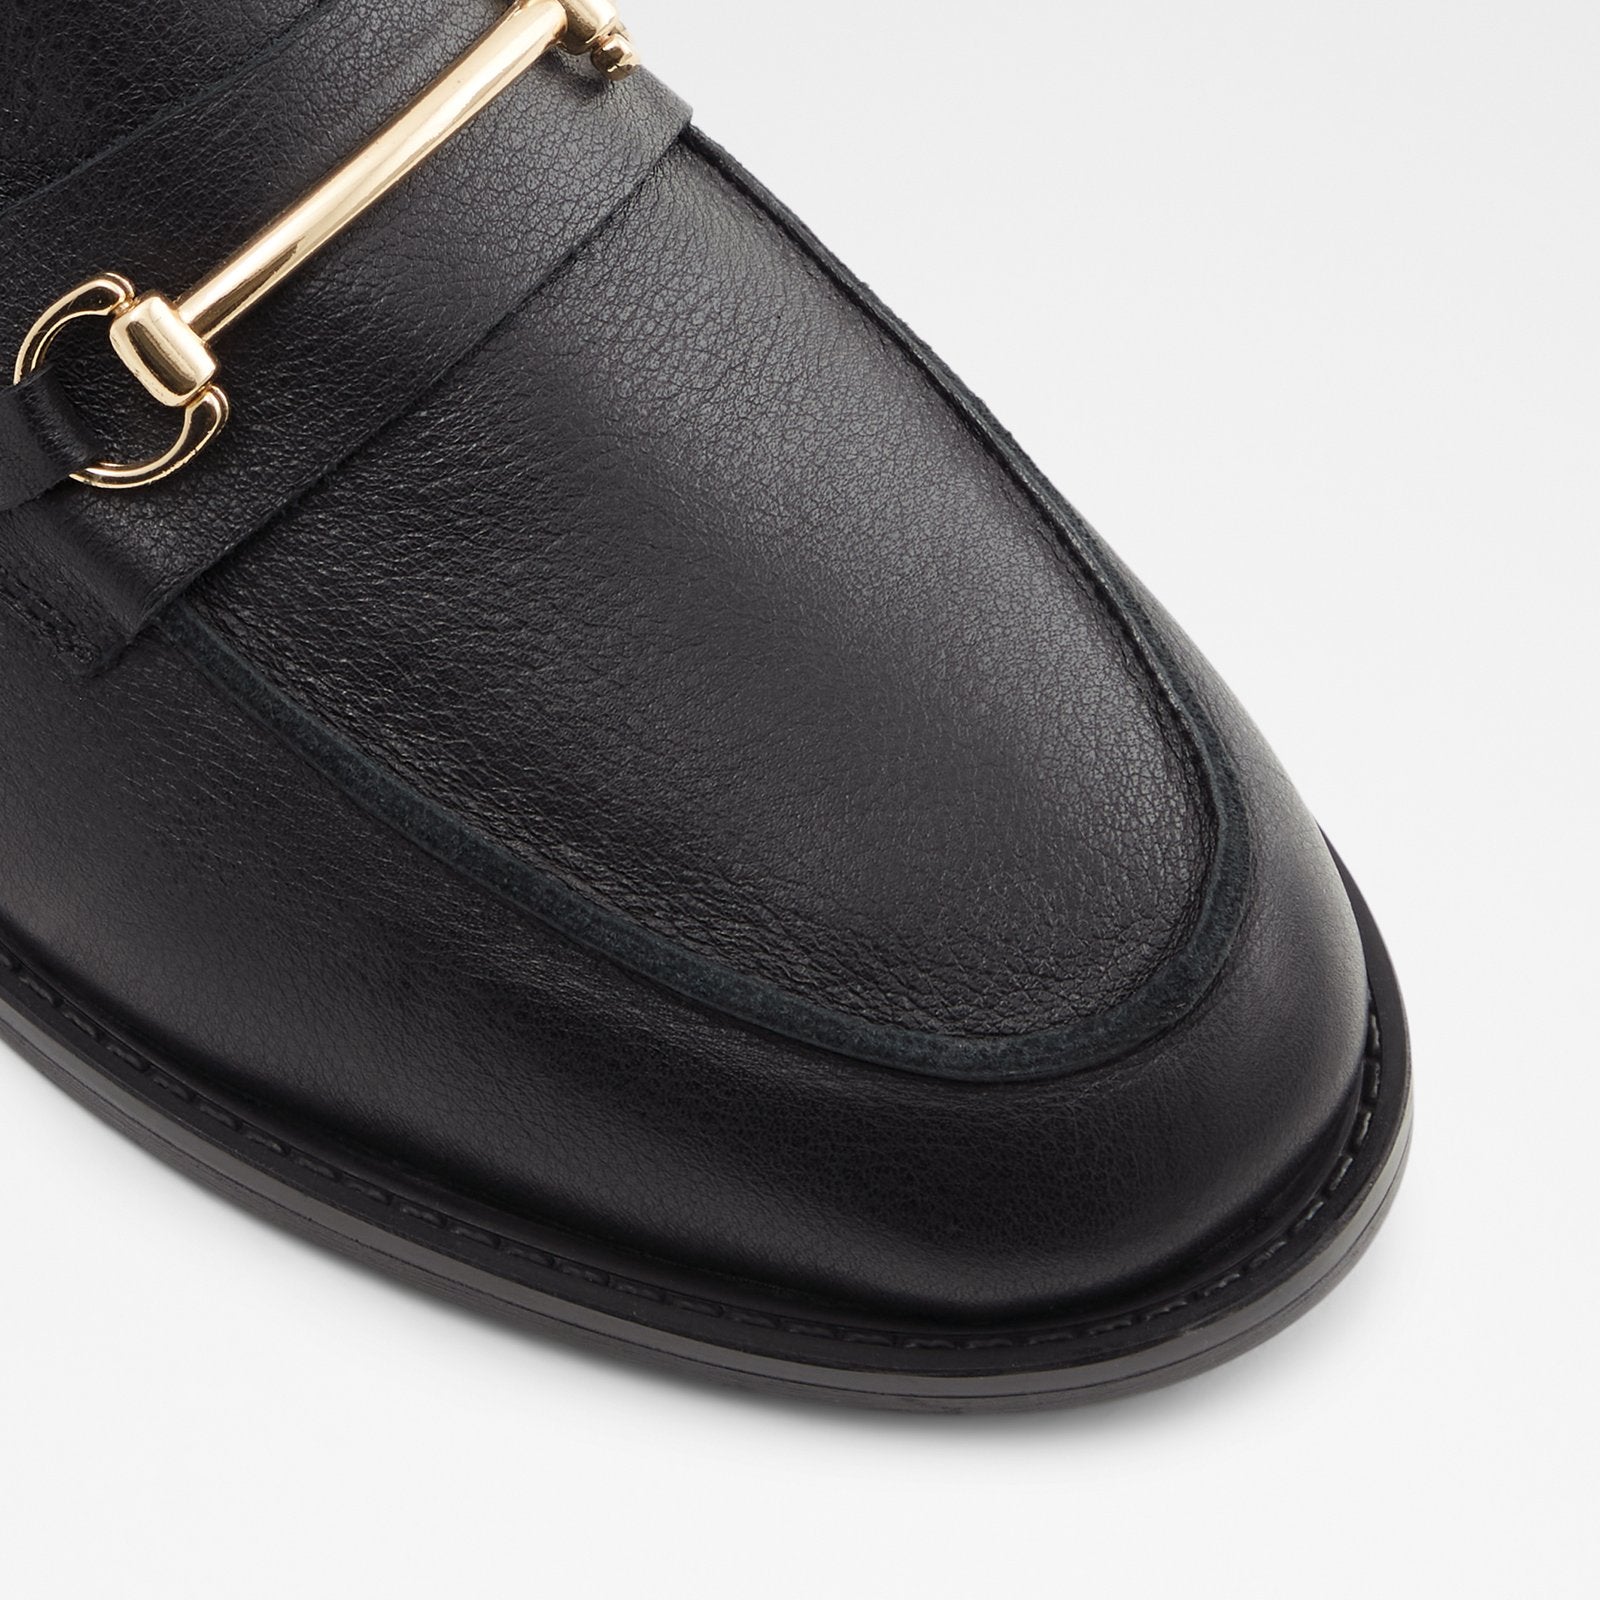 Derena / Loafers Women Shoes - Black - ALDO KSA